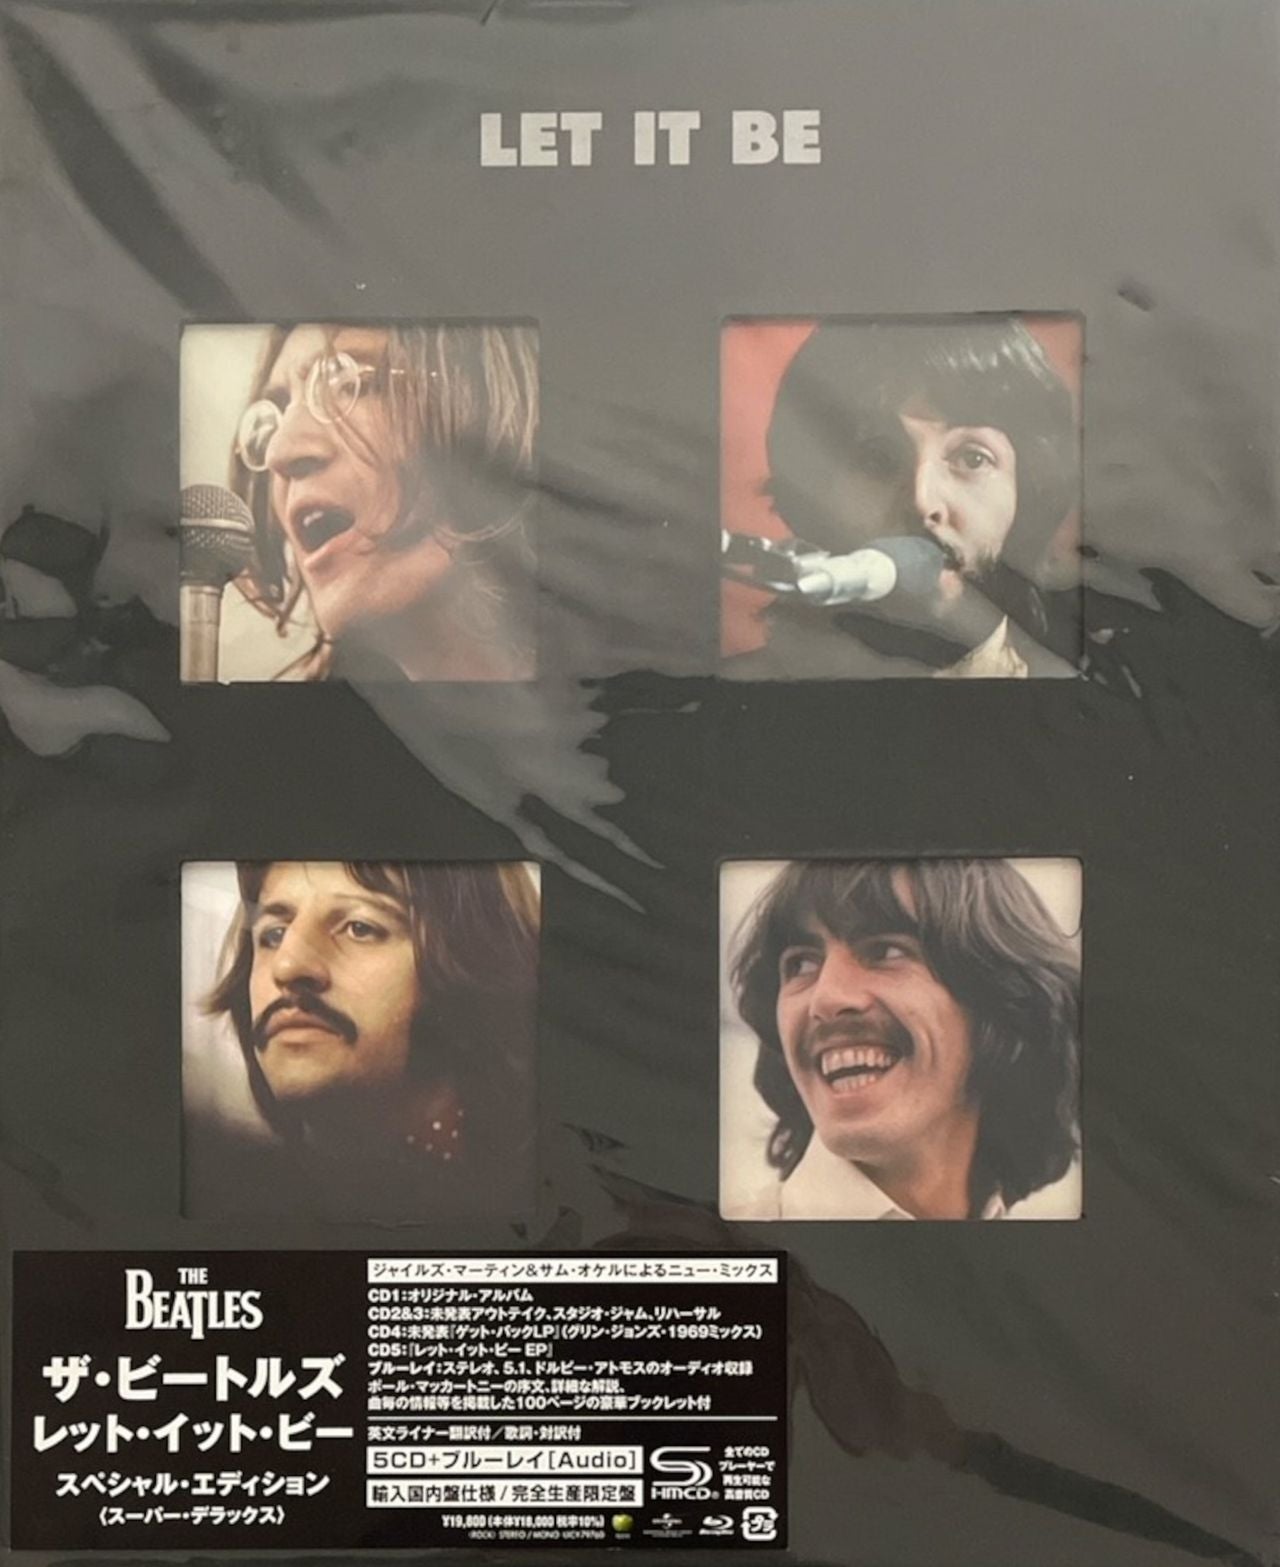 The Beatles Let It Be - Super Deluxe 5CD/Blu-ray Japanese Cd album box —  RareVinyl.com